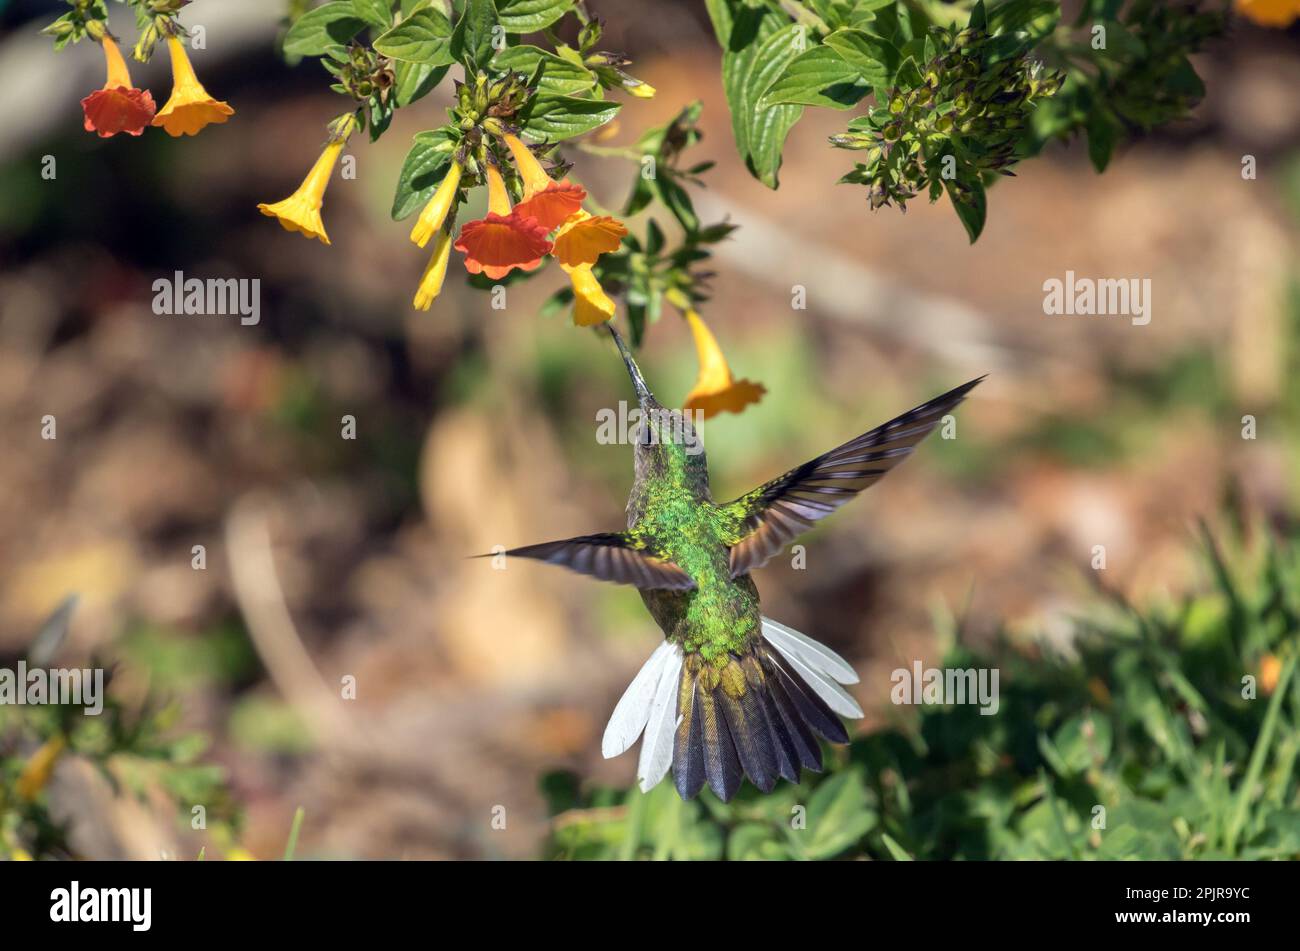 Closeup of Stripe-tailed Hummingbird in flight and feeding from flowers of Marmalade Shrub in Panama Stock Photo